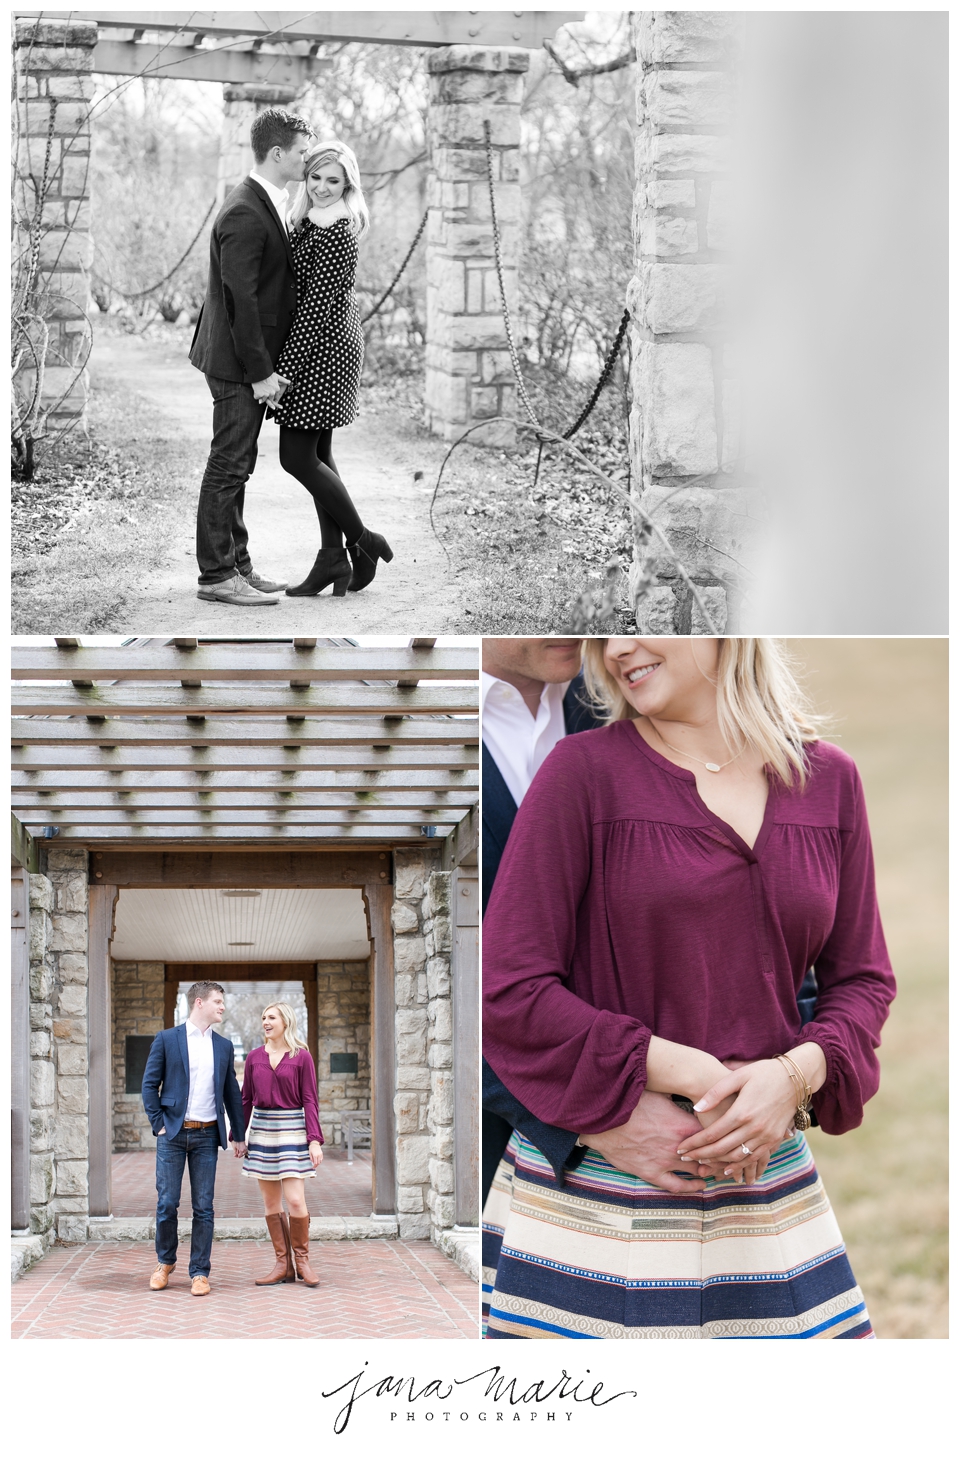 Loose Park Rose Garden, Kansas City engagement, Beloved session, Portraits, Jana Marie Photography, Couples, Love, Happy, KC wedding